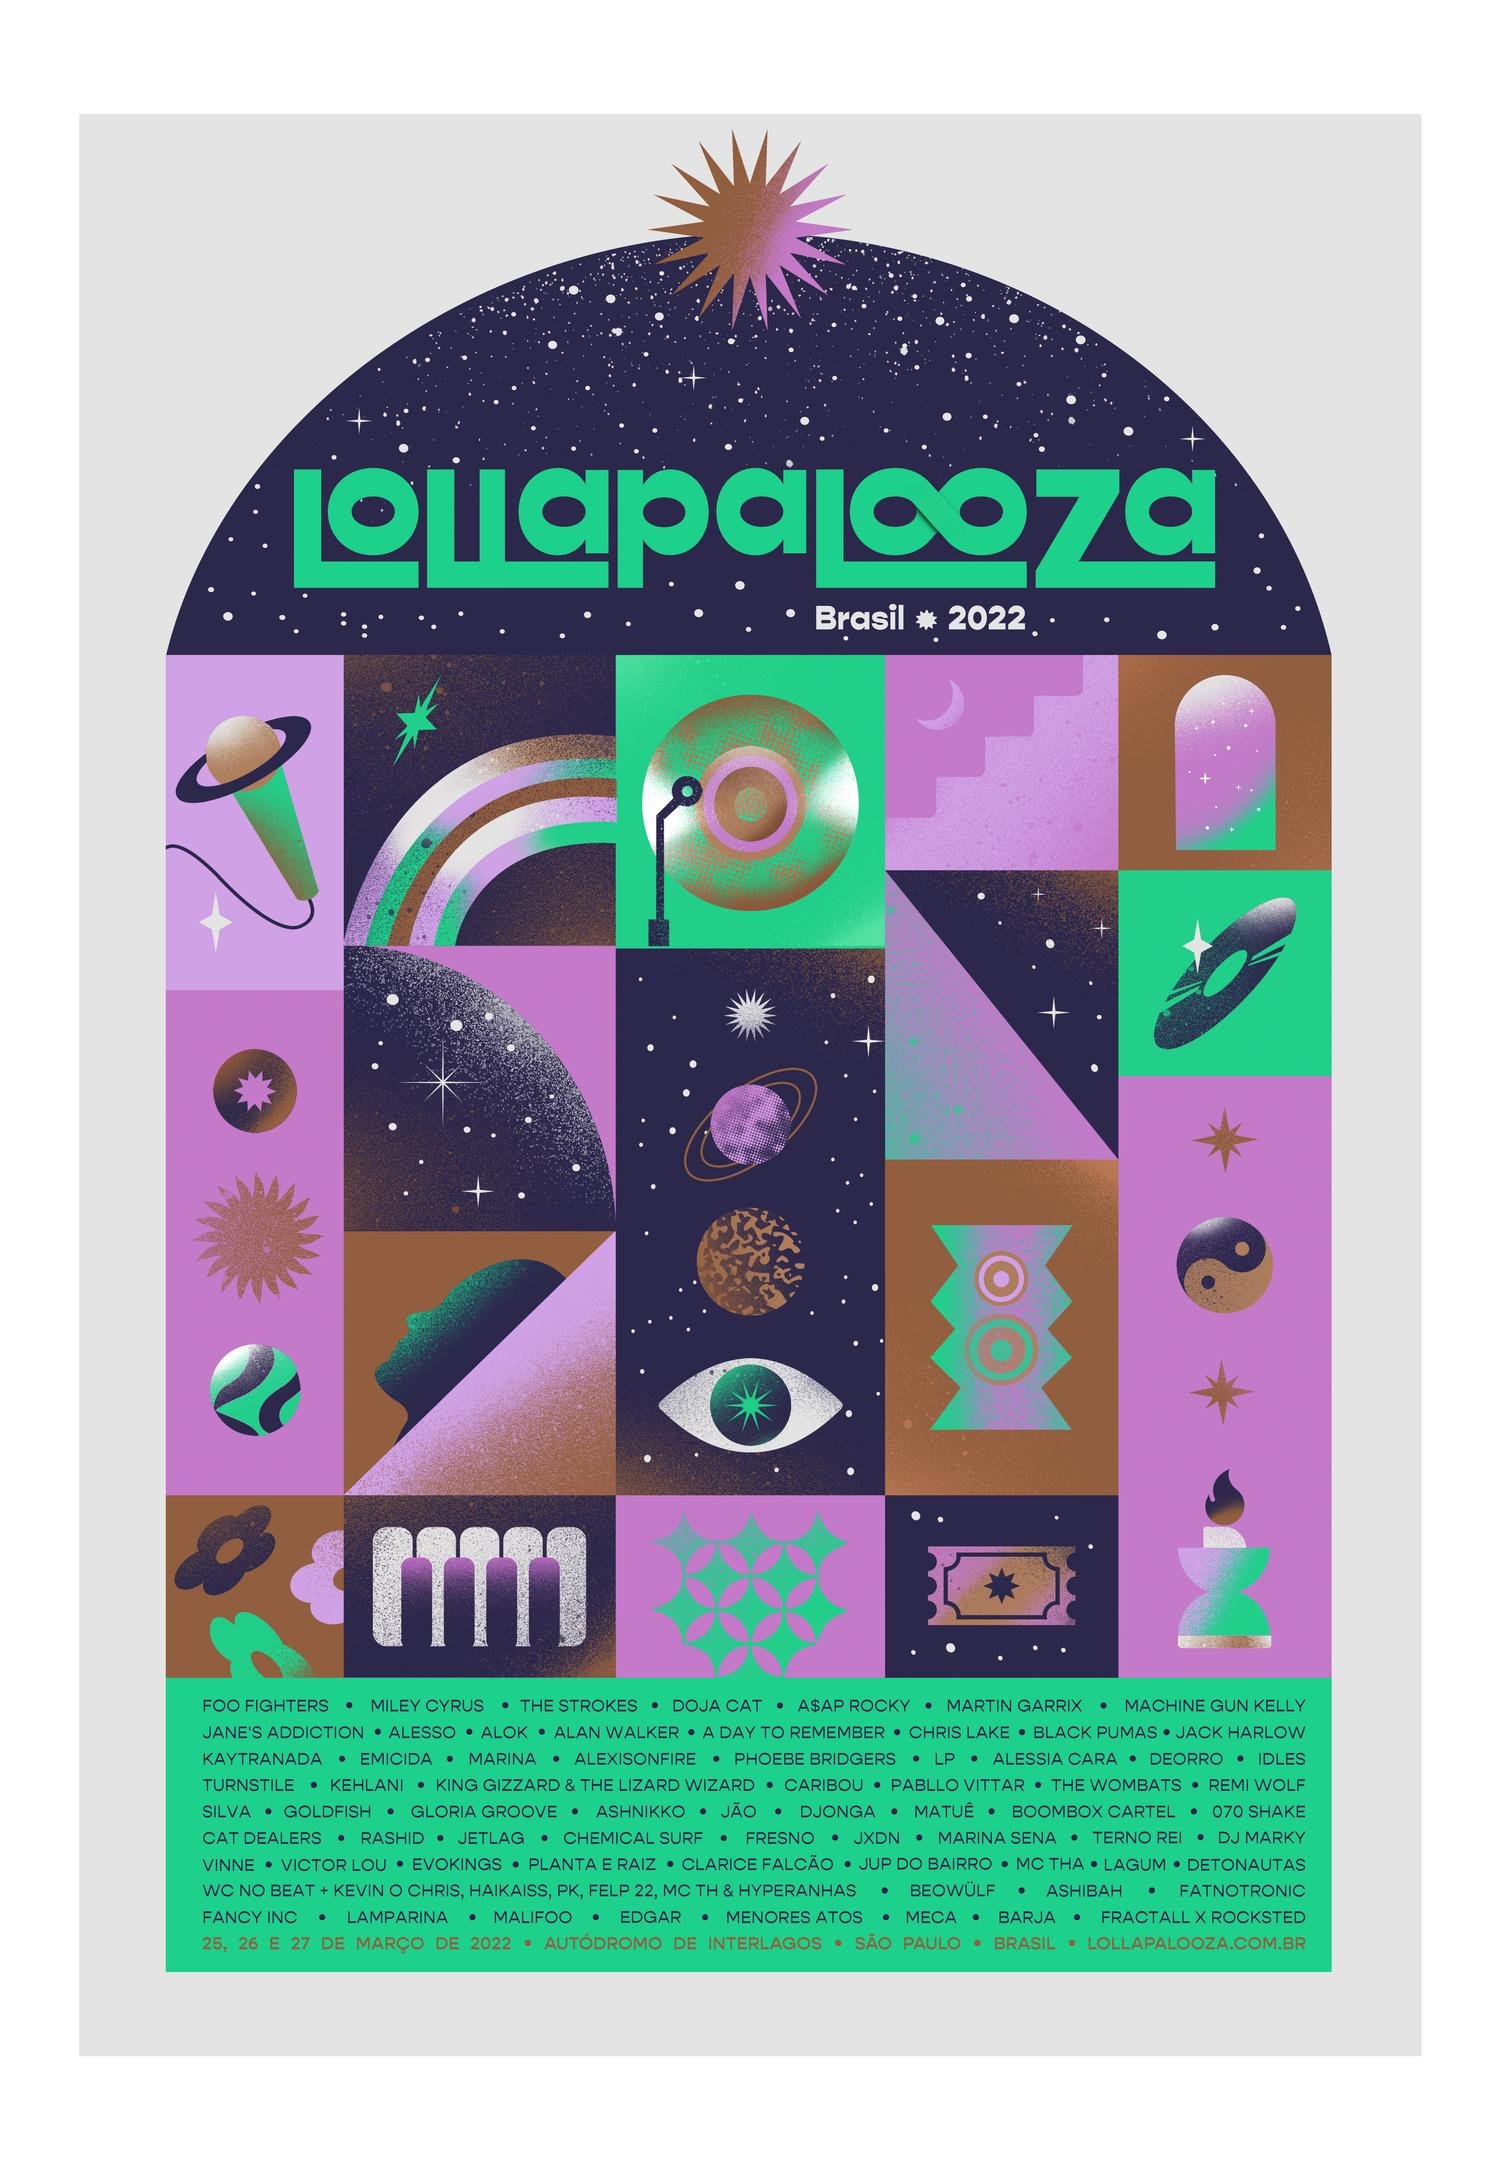 Lollapalooza Brazil 2022 (1).jpg